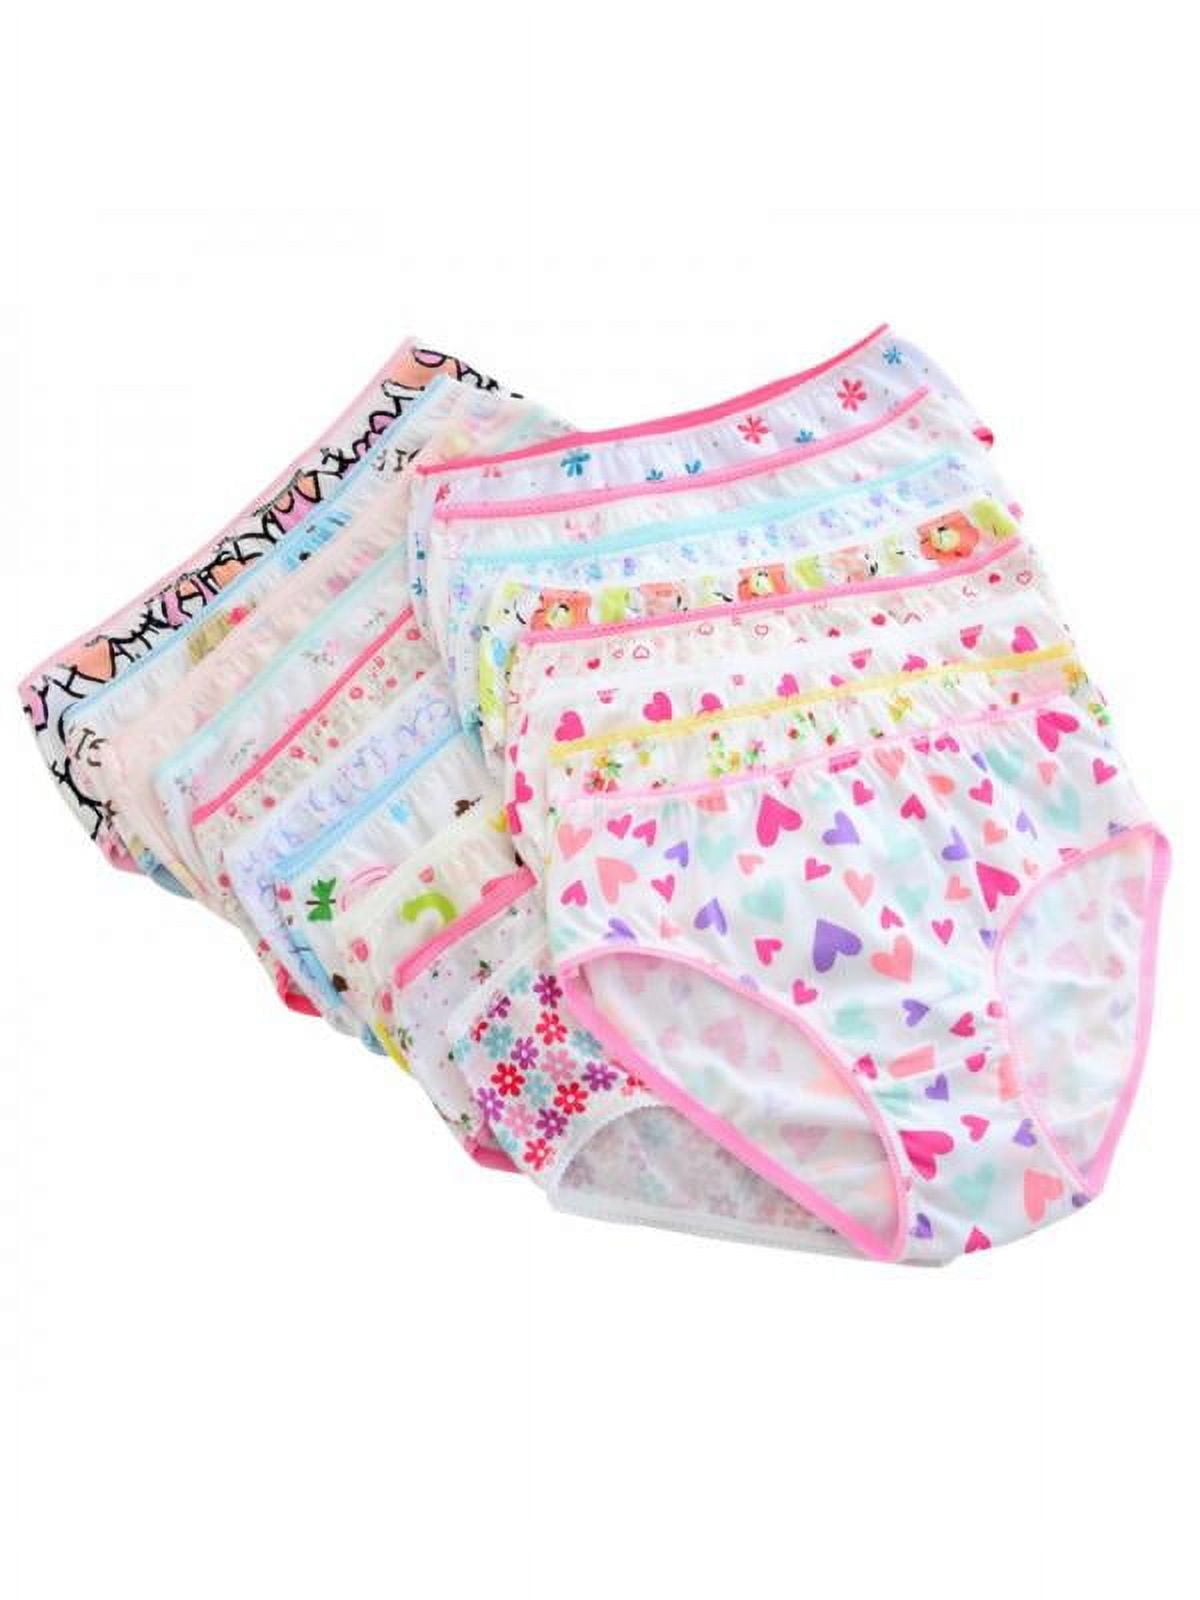 Baby Kids 6pcs/set Soft Cotton Panties Elastic Knickers Underwear